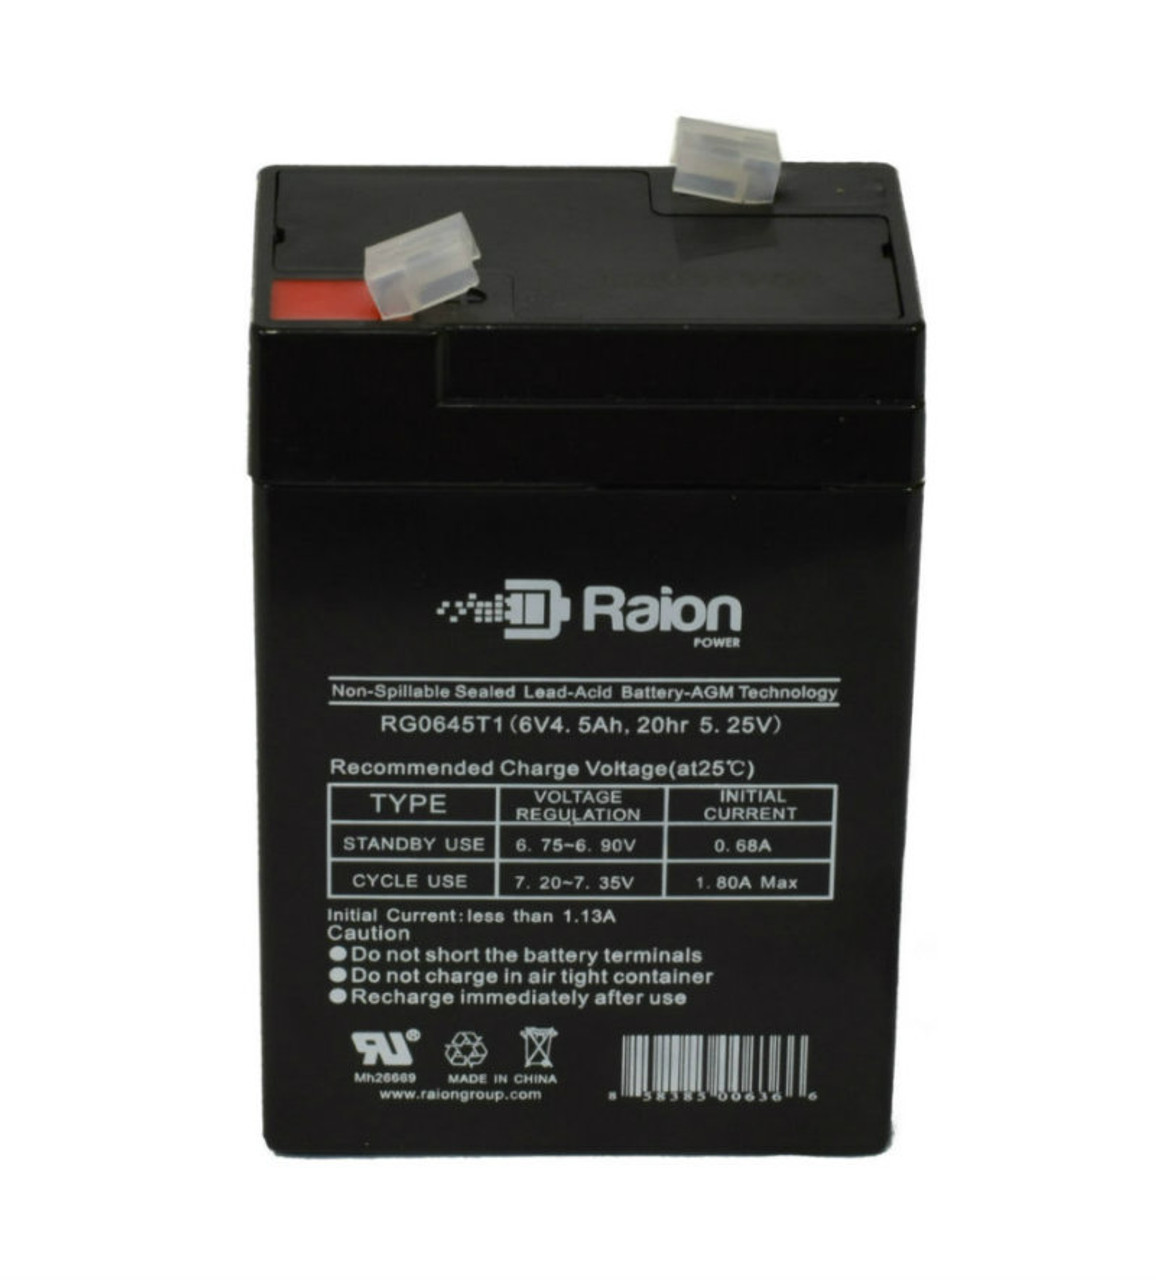 Raion Power RG0645T1 Replacement Battery Cartridge for Emergi-Lite M1860004